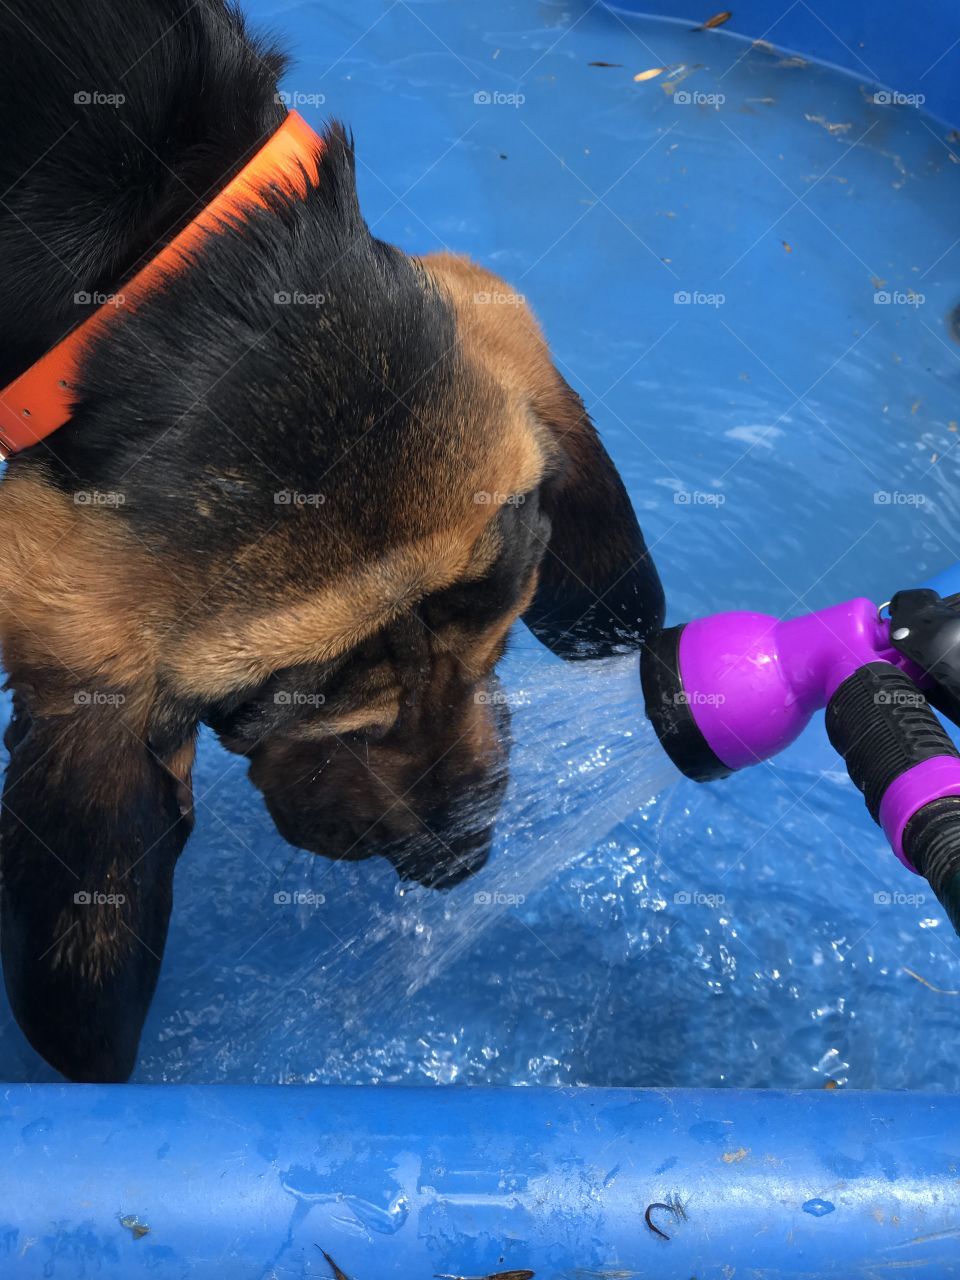 Pup in pool